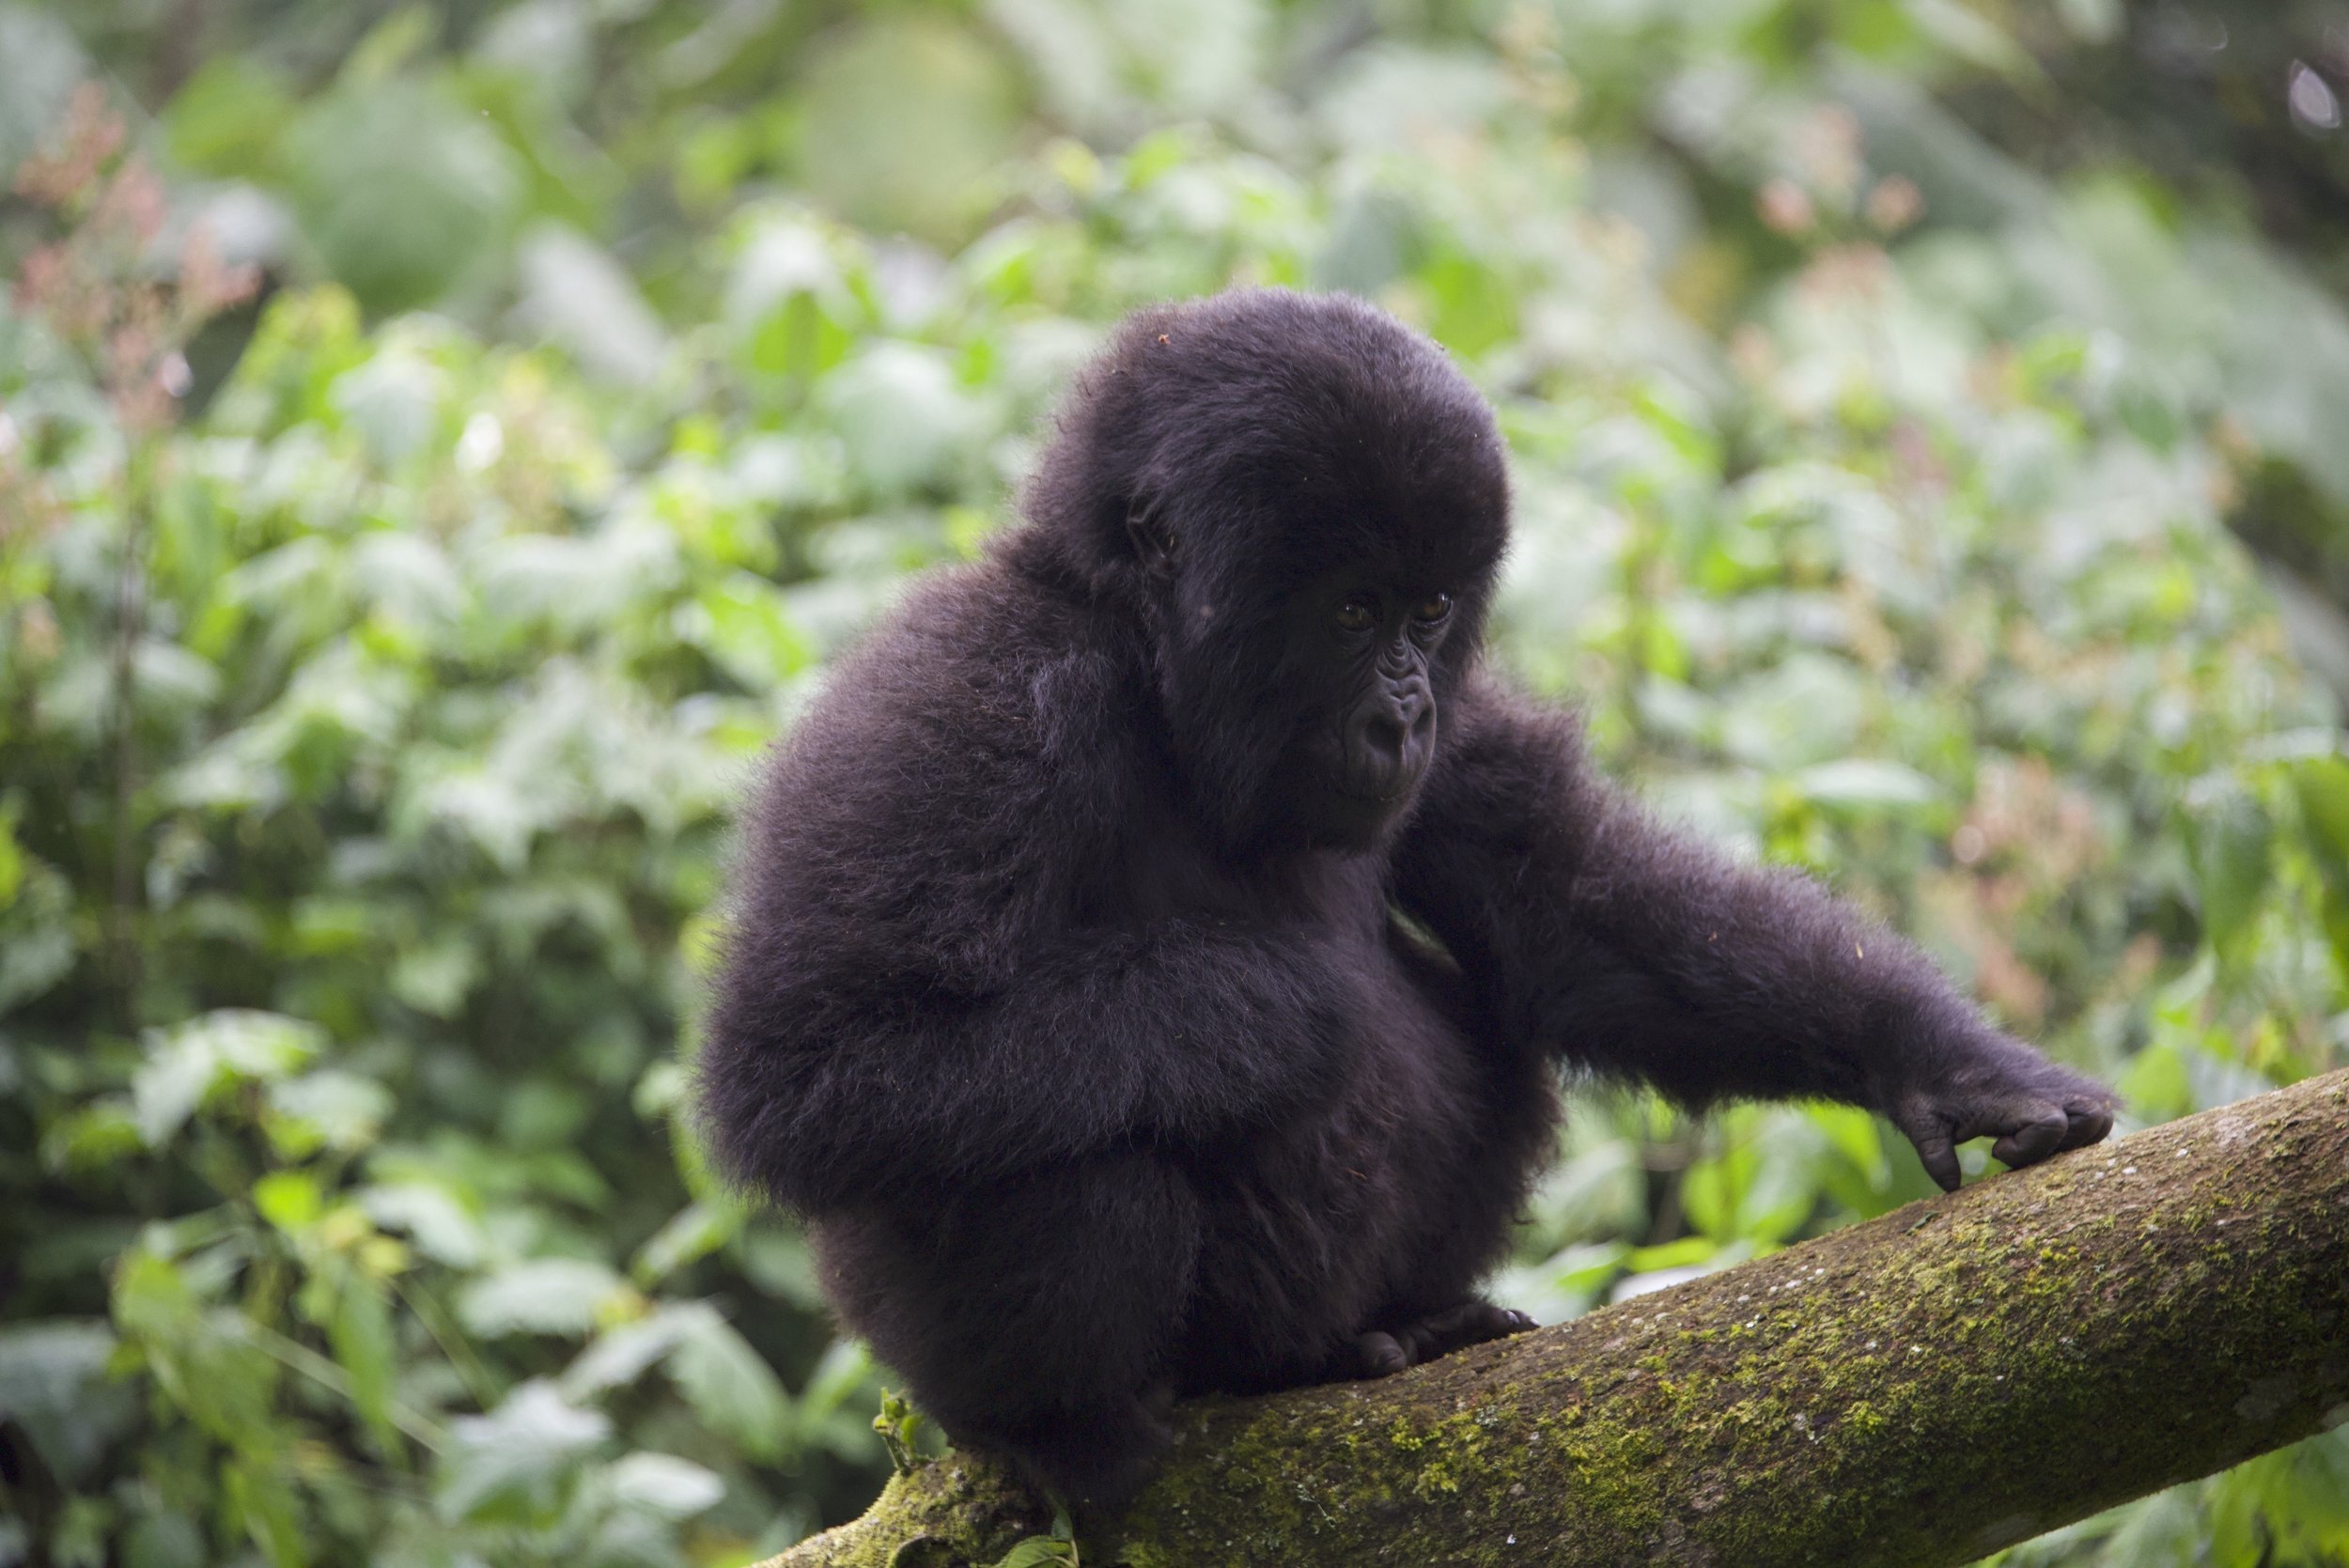  Infant gorilla on a tree. Photo courtesy of Caitlin Starowicz. 